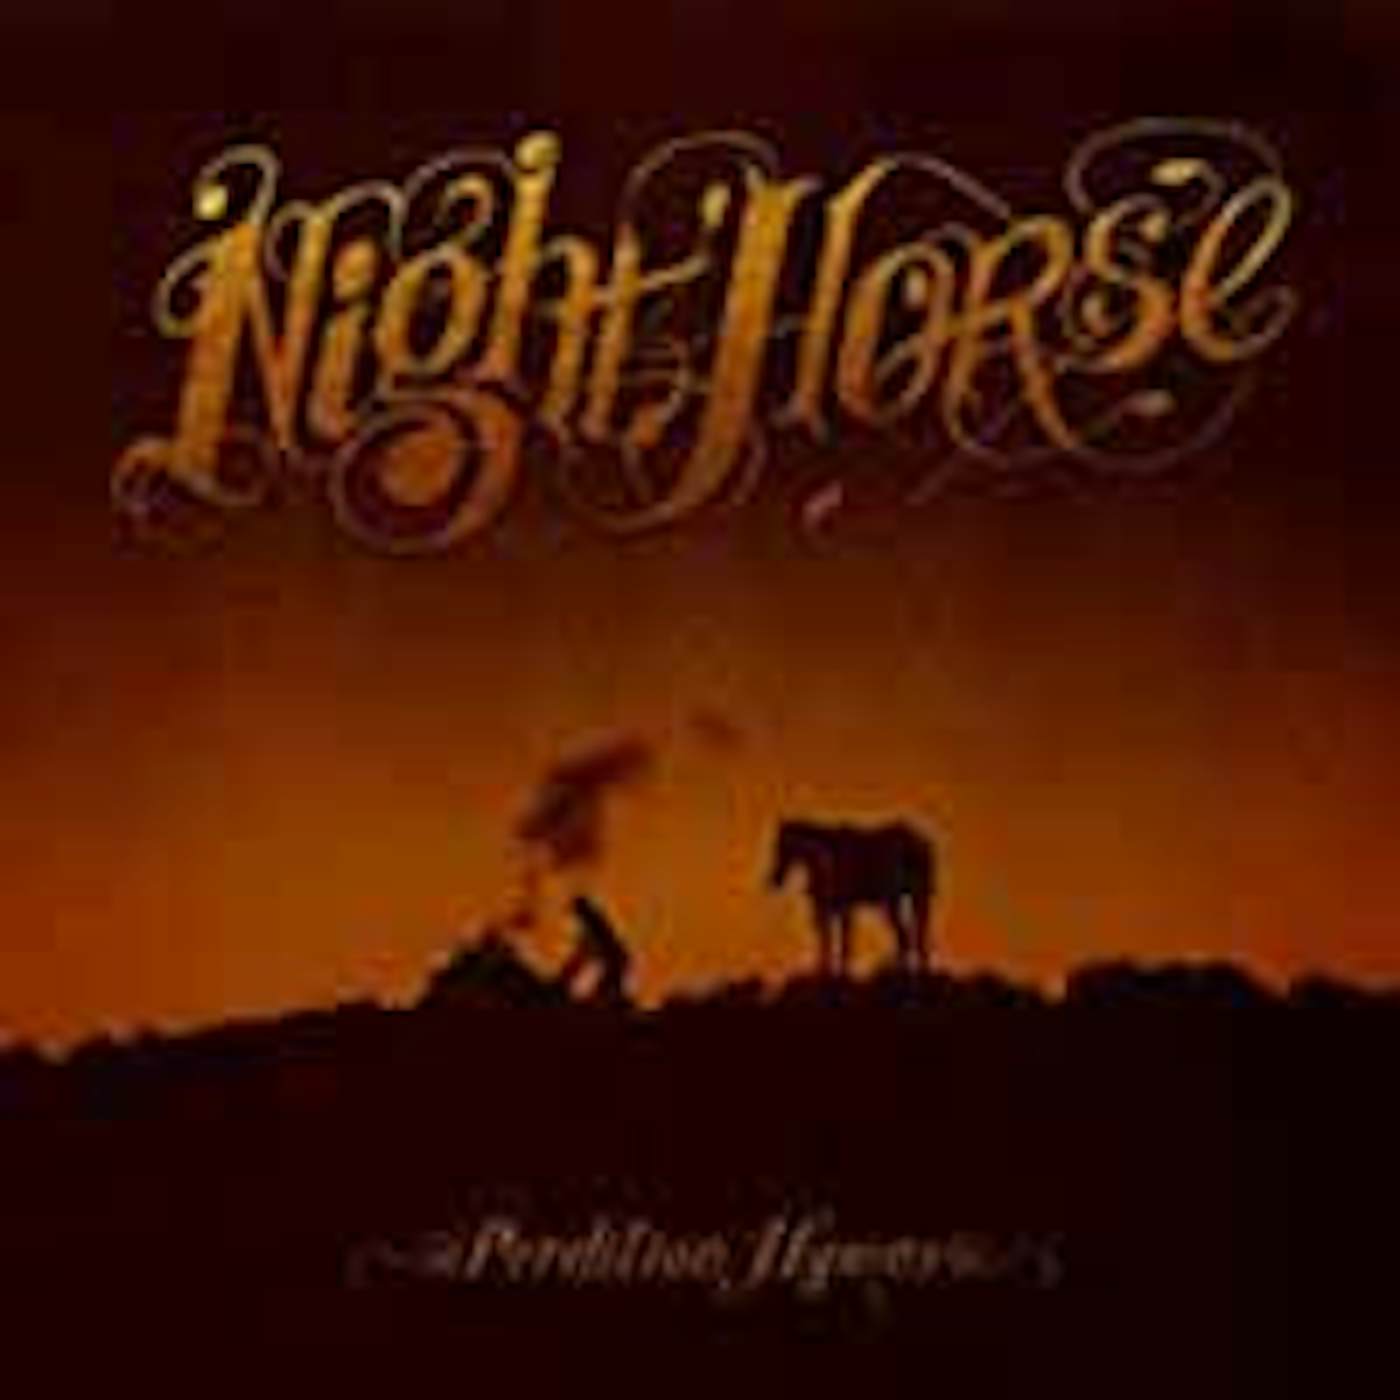 Night Horse LP - Perdition Hymns (Vinyl)